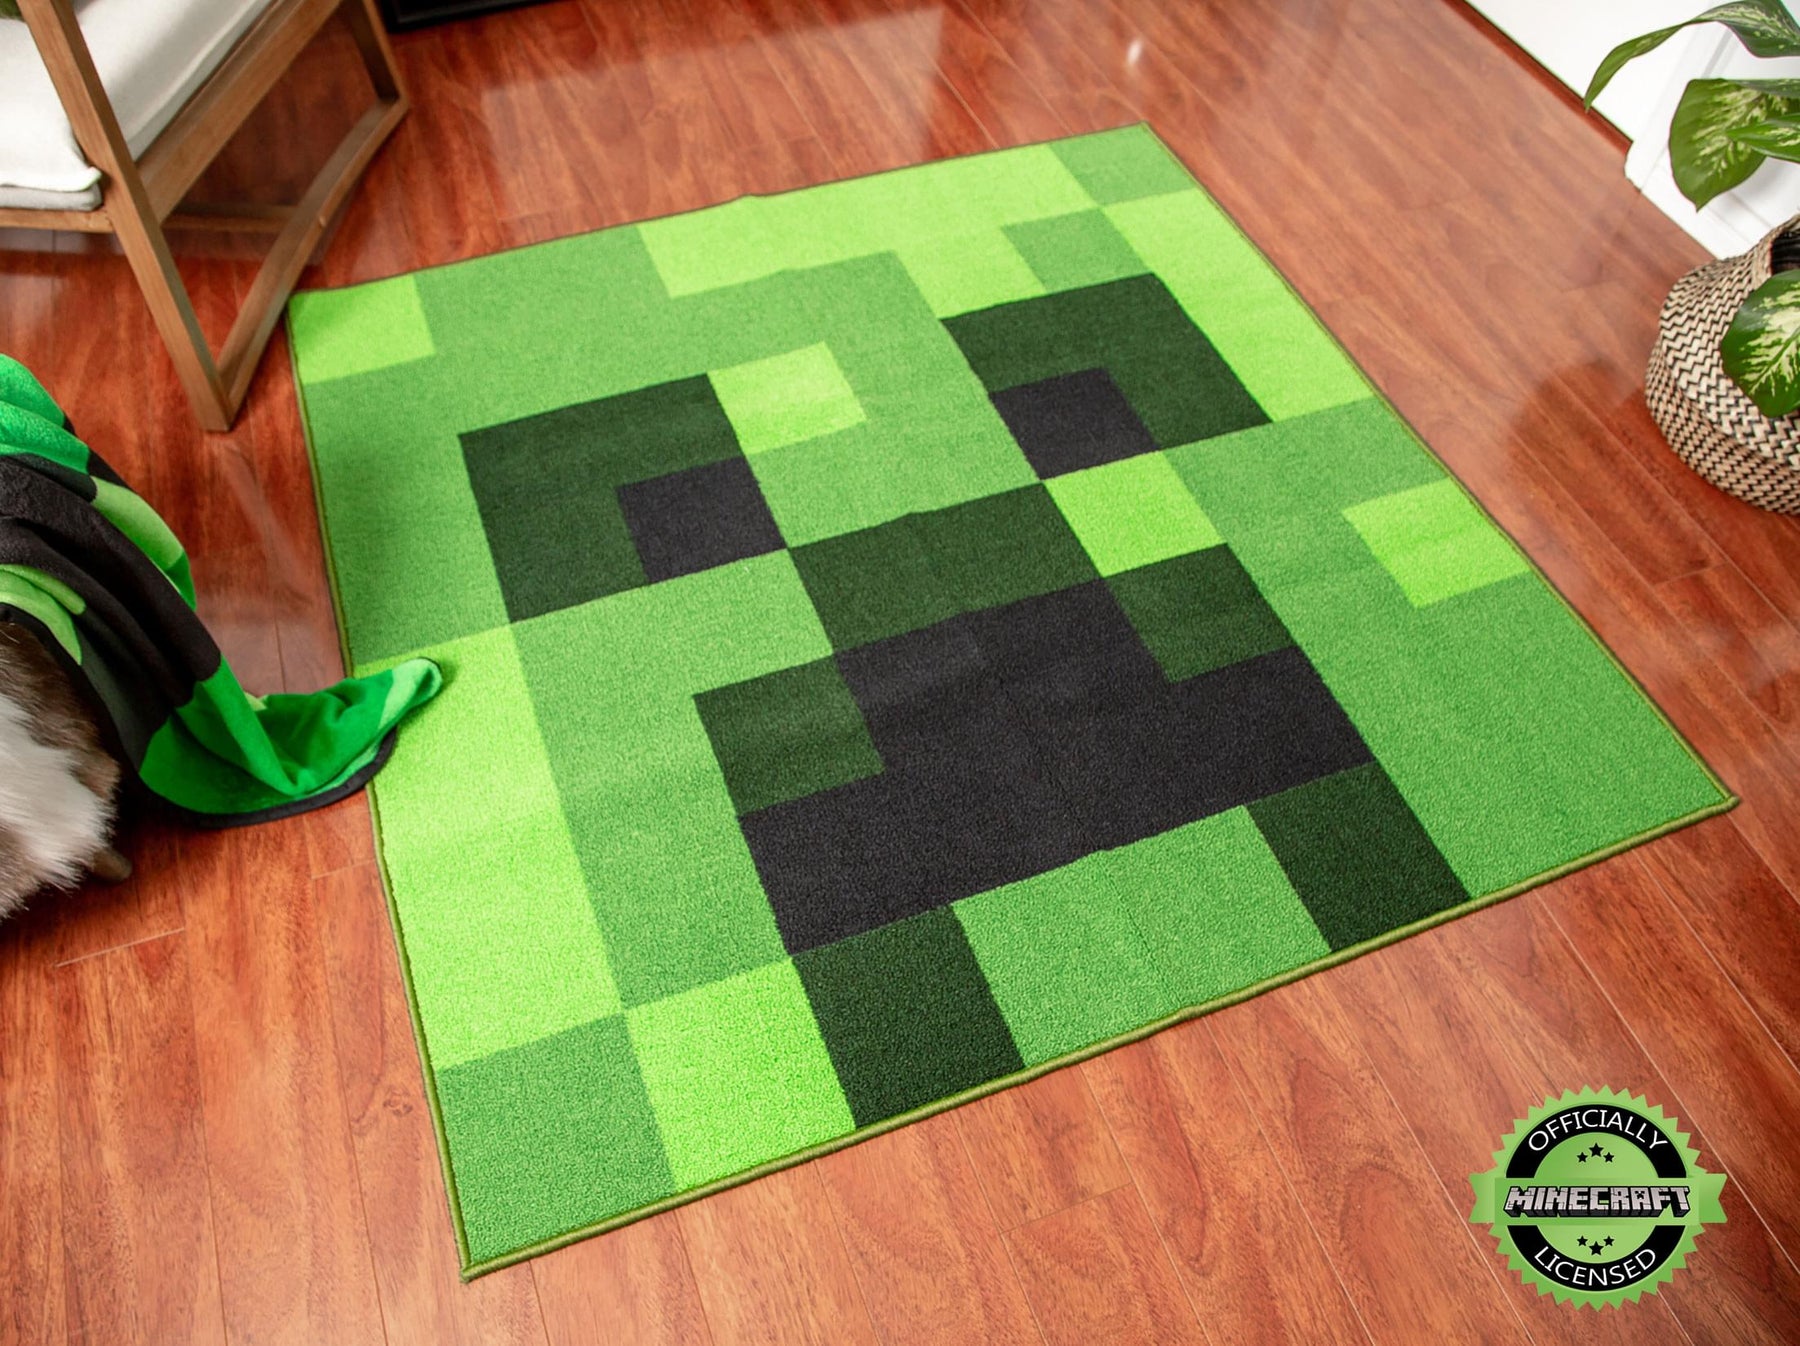 Minecraft Green Creeper Square Area Rug | 52 Inches